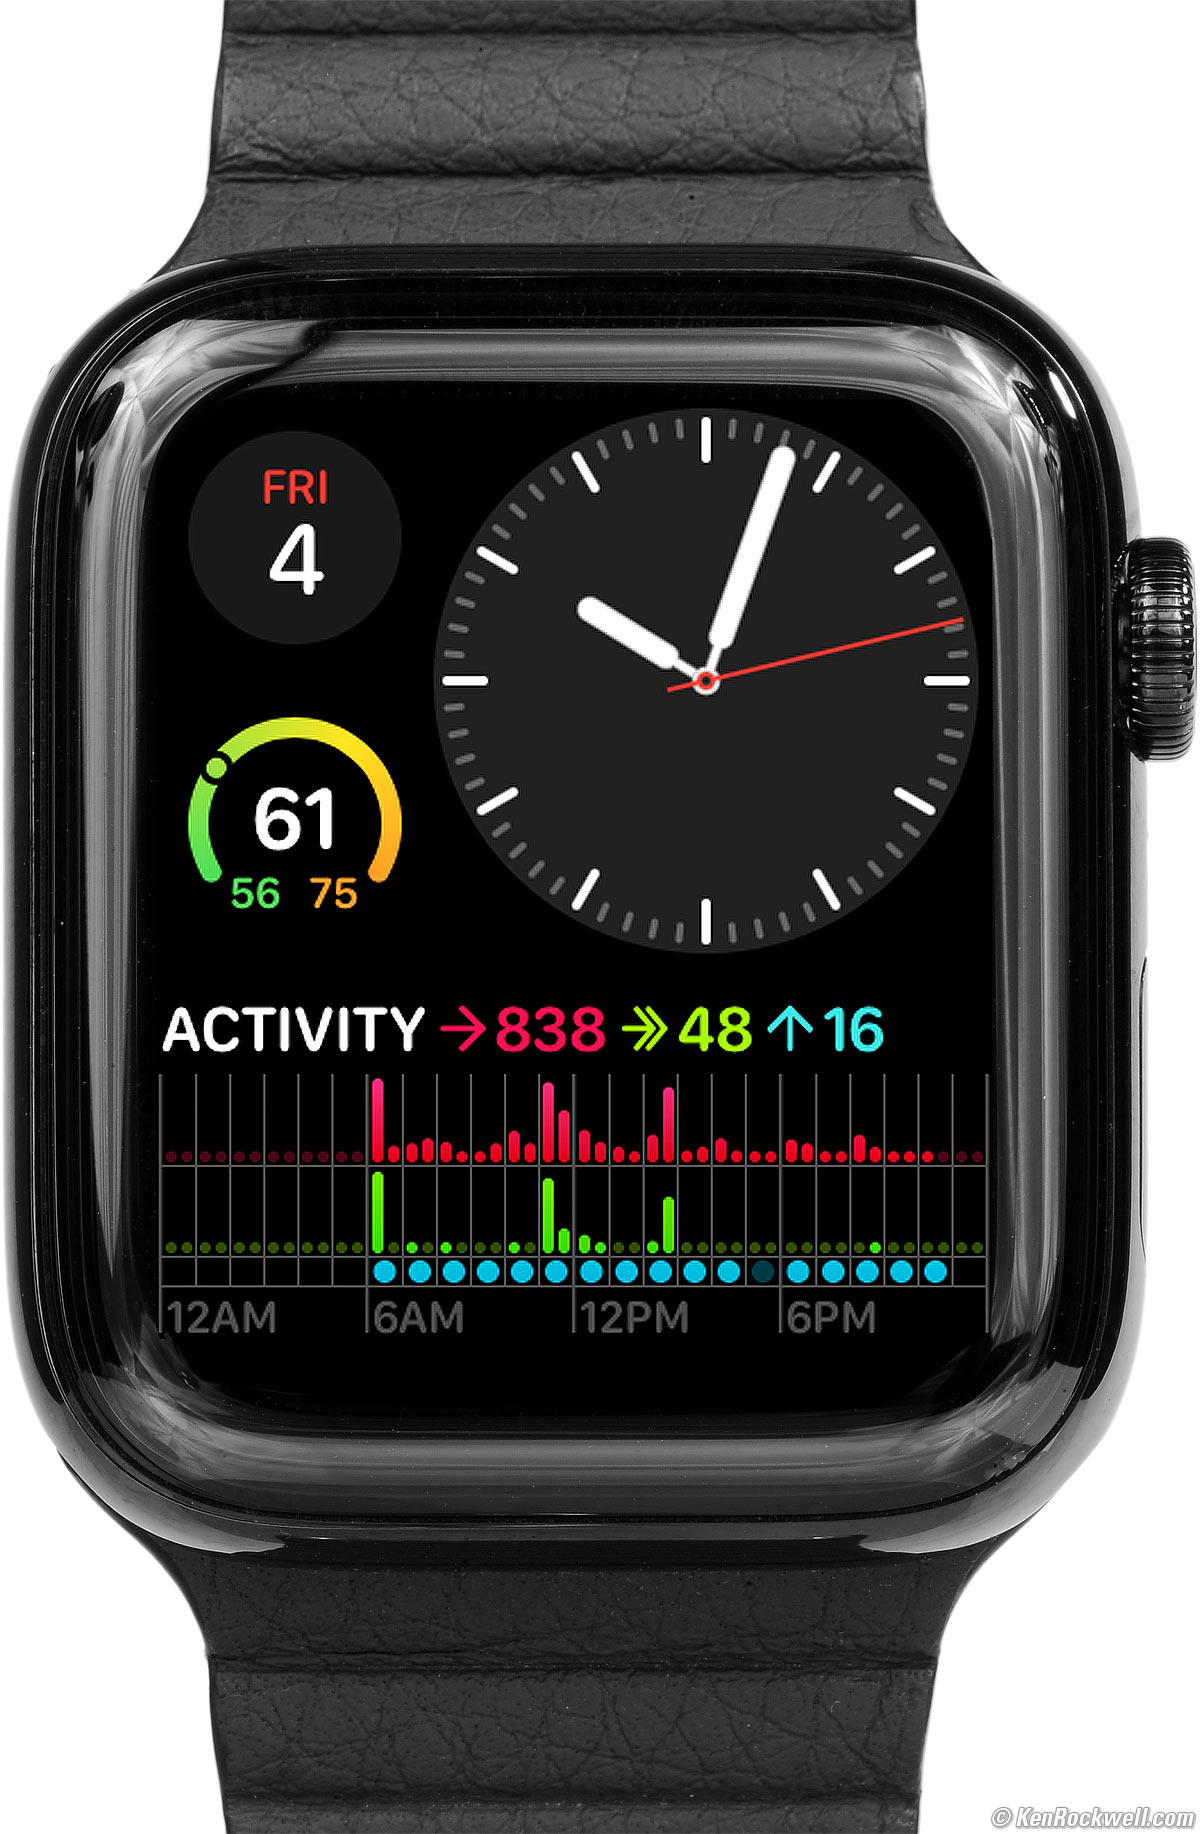 apple watch s2 price